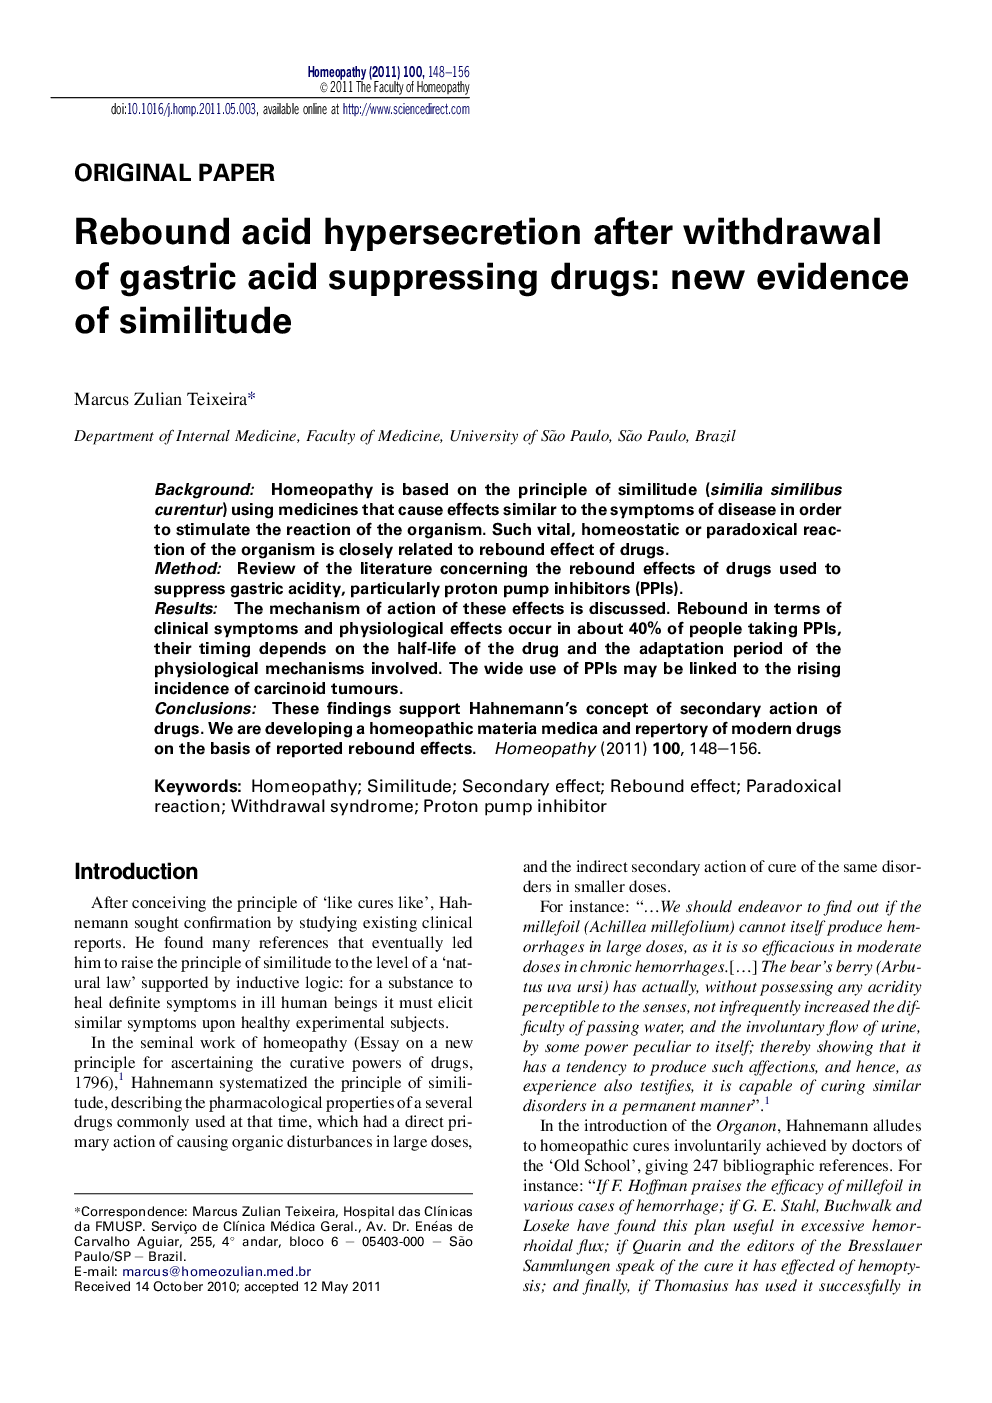 Rebound acid hypersecretion after withdrawal of gastric acid suppressing drugs: new evidence of similitude